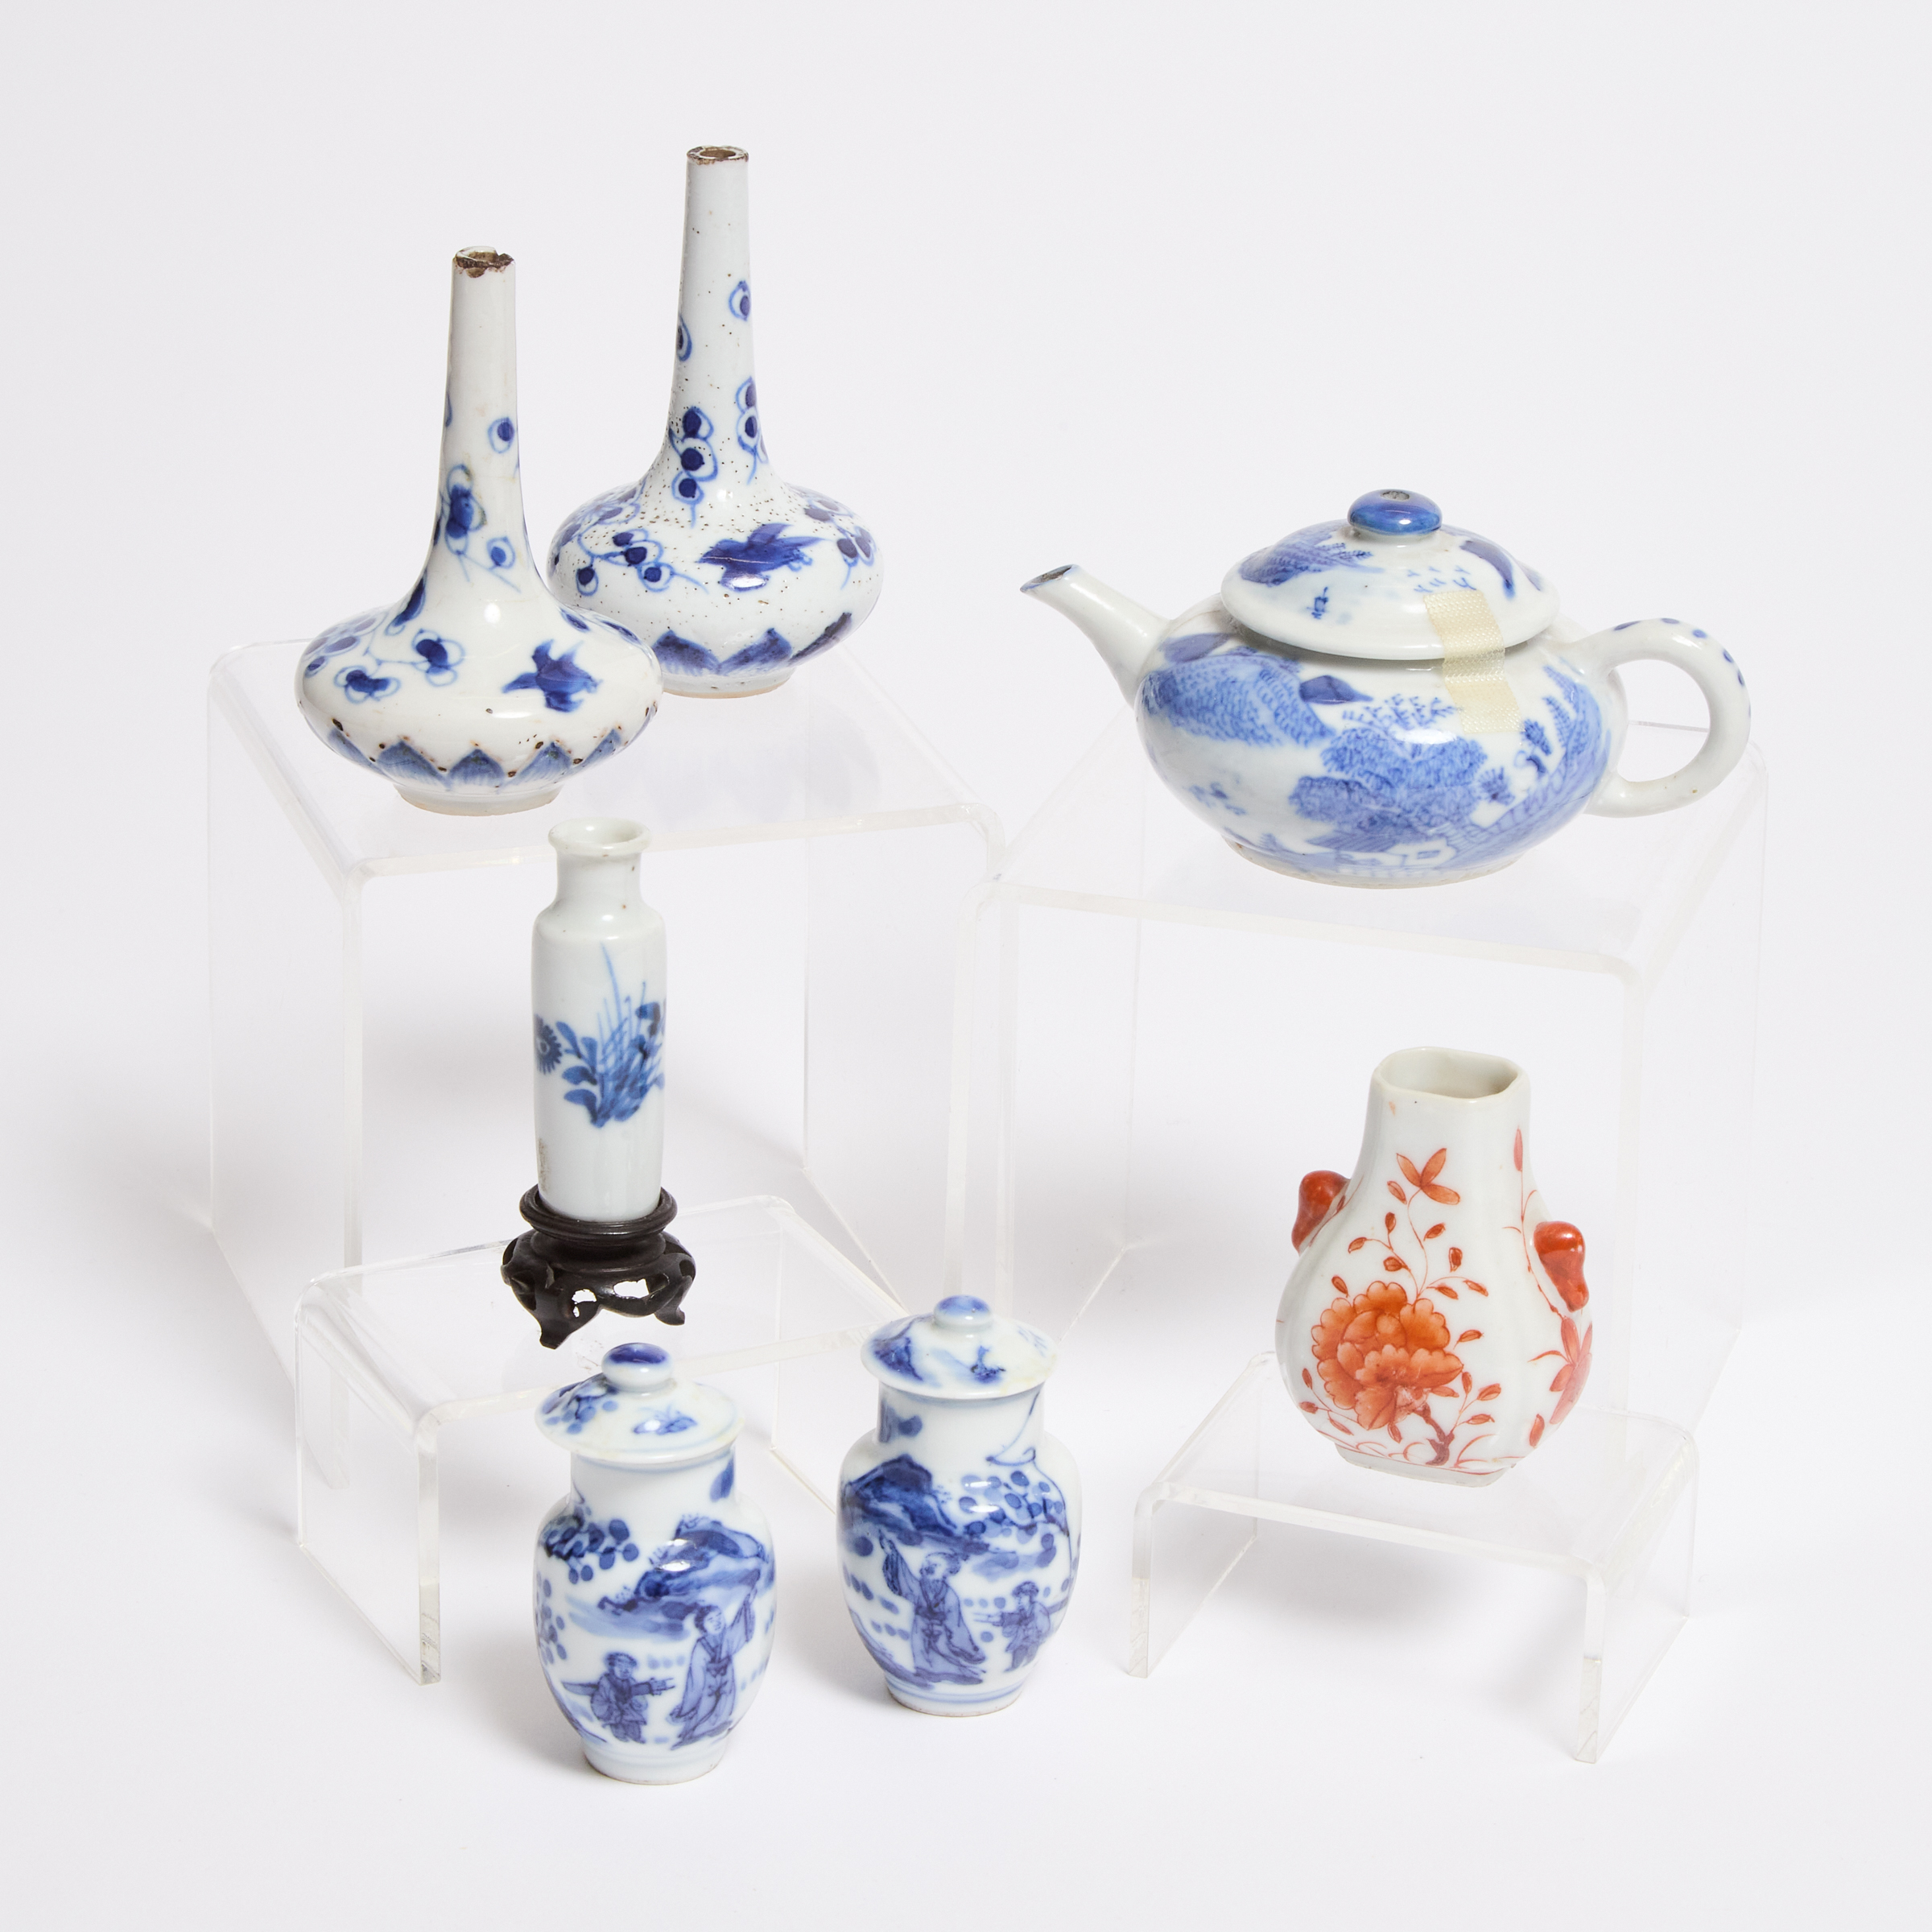 A Group of Seven Miniature Porcelain